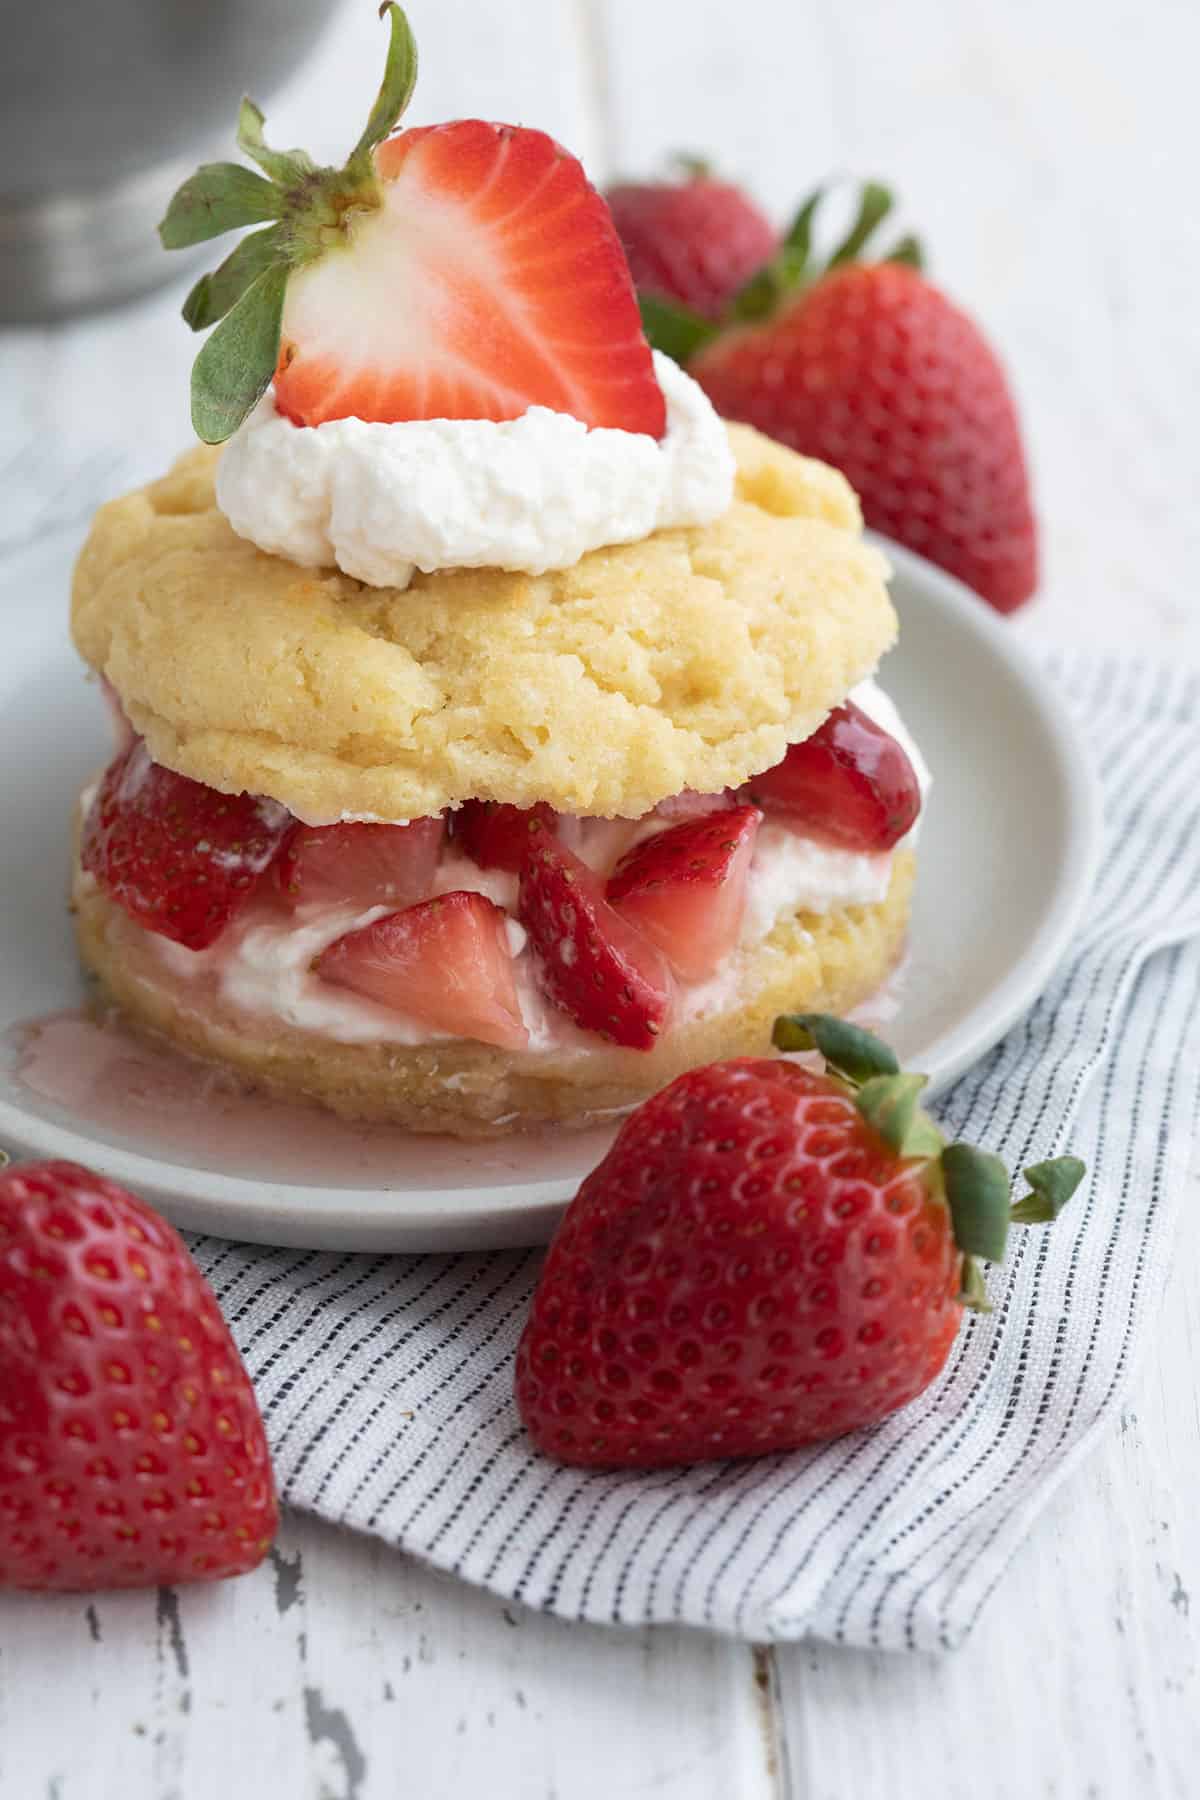 Keto Strawberry Shortcake on a gray plate over a striped napkin, with fresh strawberries strewn around.